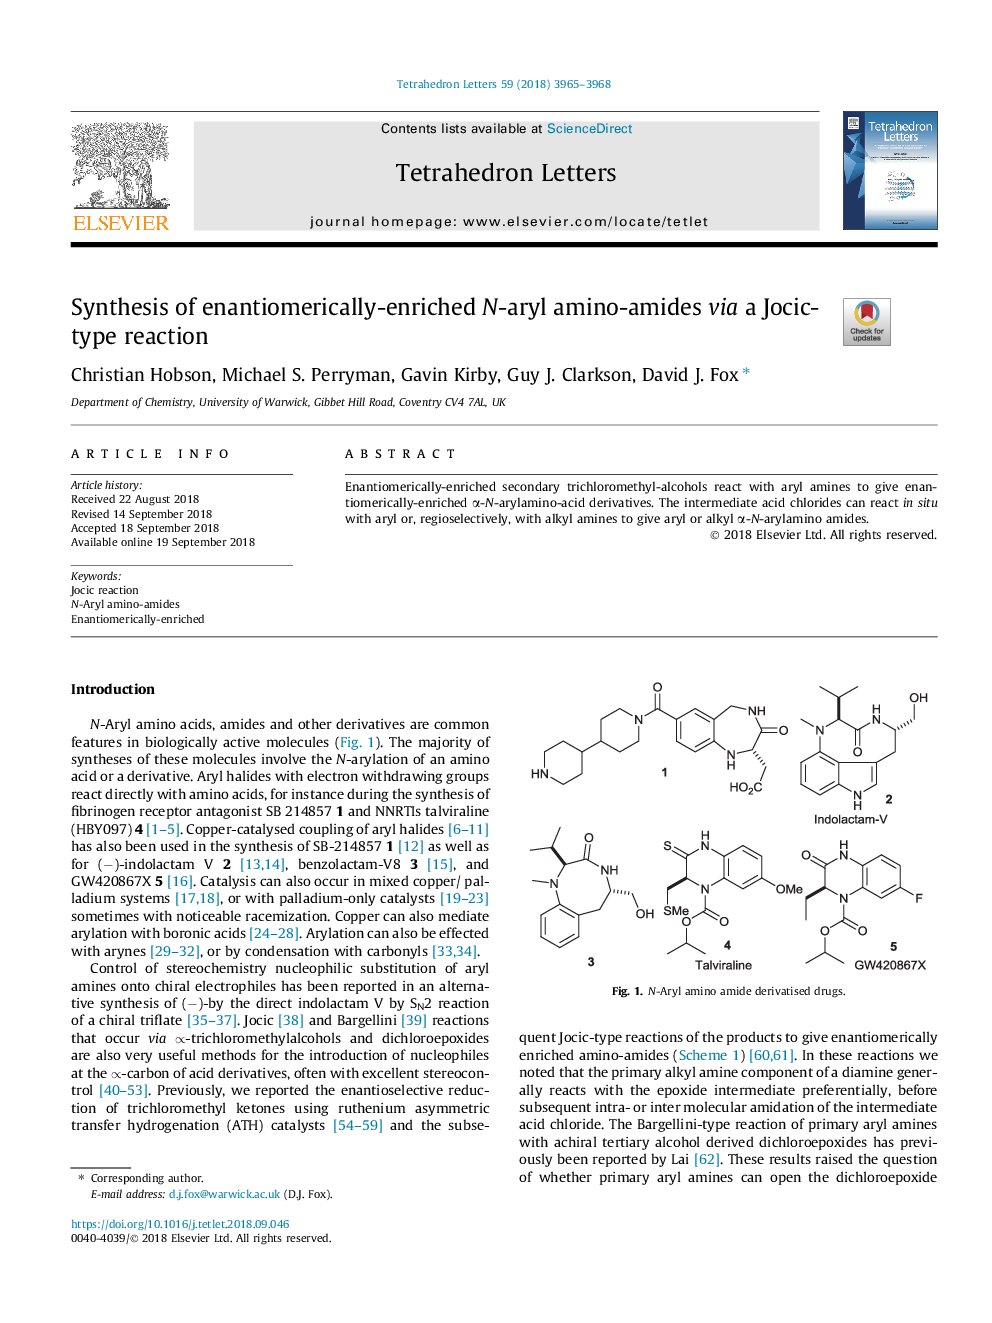 Synthesis of enantiomerically-enriched N-aryl amino-amides via a Jocic-type reaction